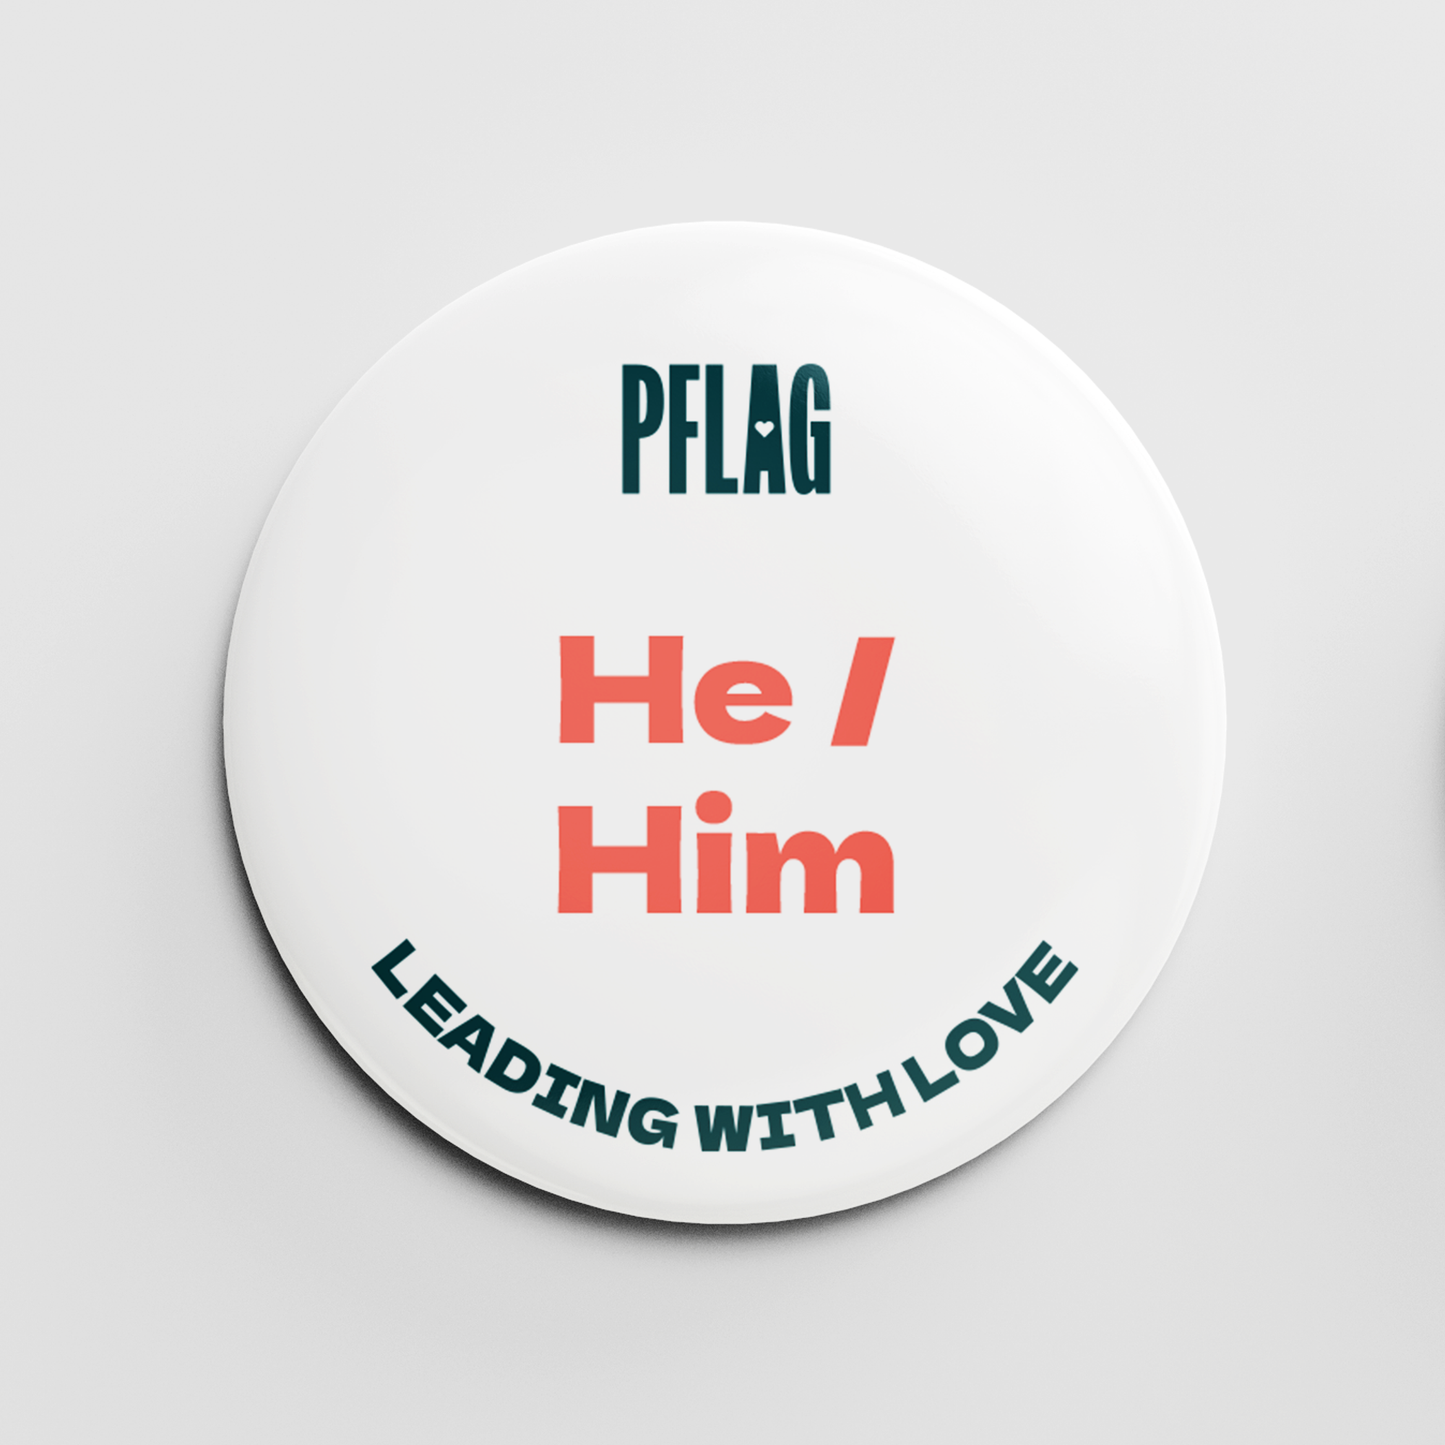 PFLAG Pronoun Buttons